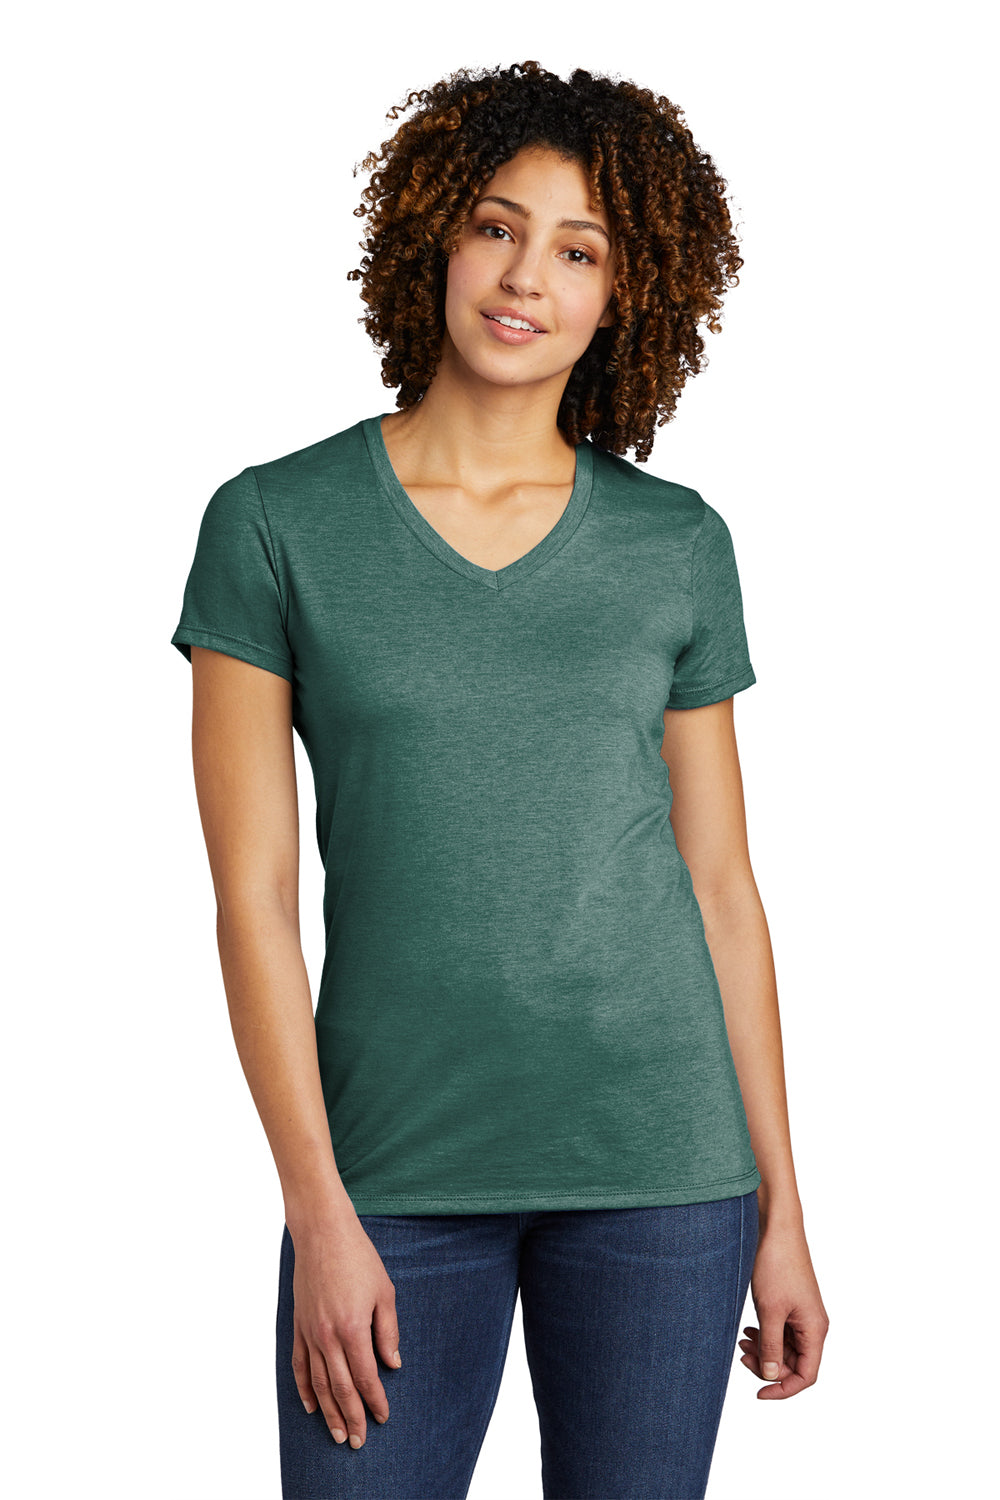 Allmade AL2018 Womens Short Sleeve V-Neck T-Shirt Deep Sea Green Model Front